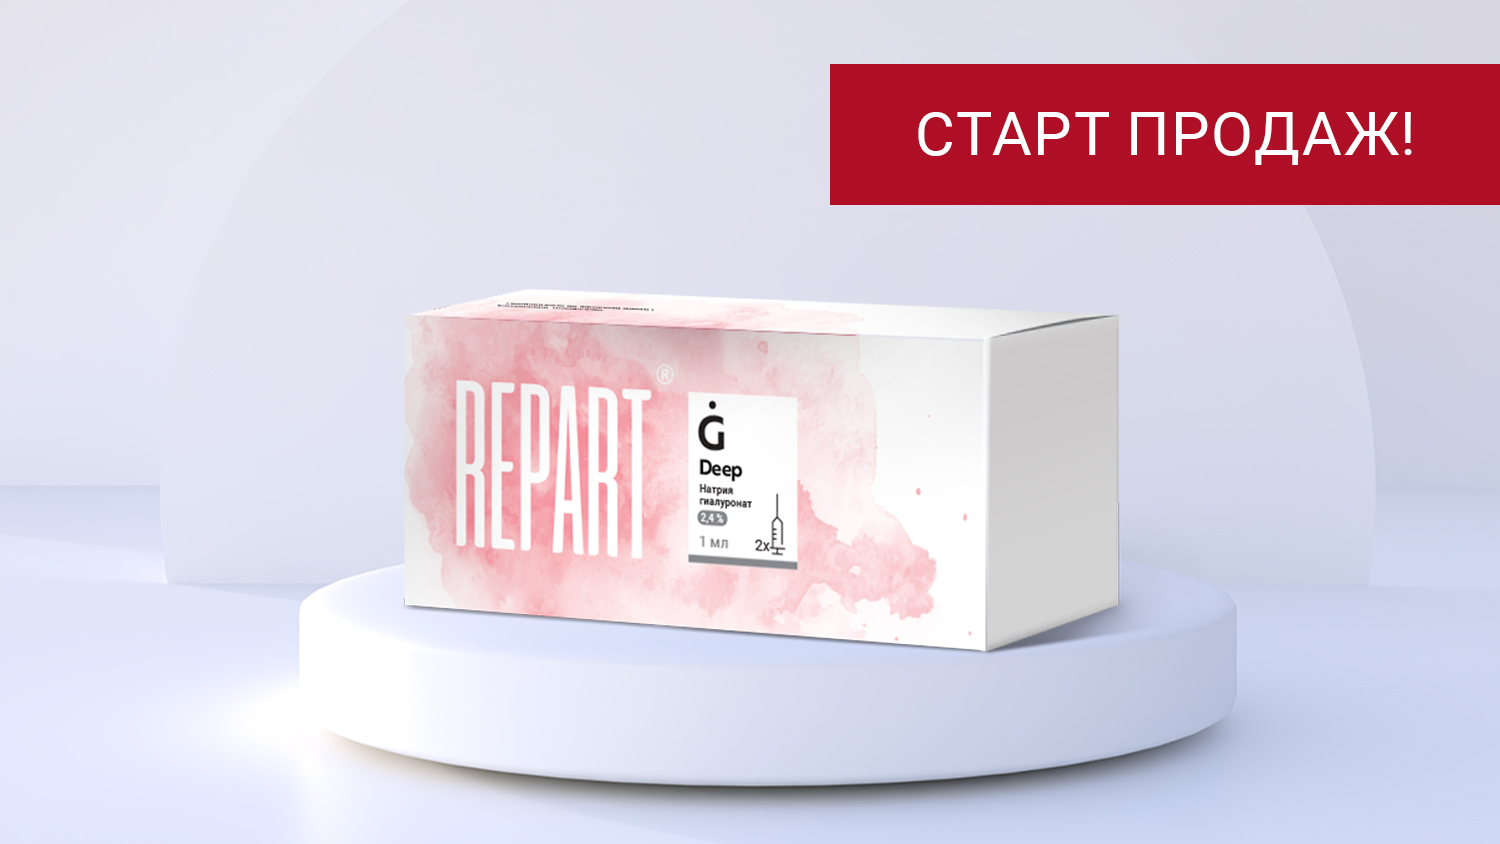 Repart® Ġ Deep уже в продаже!